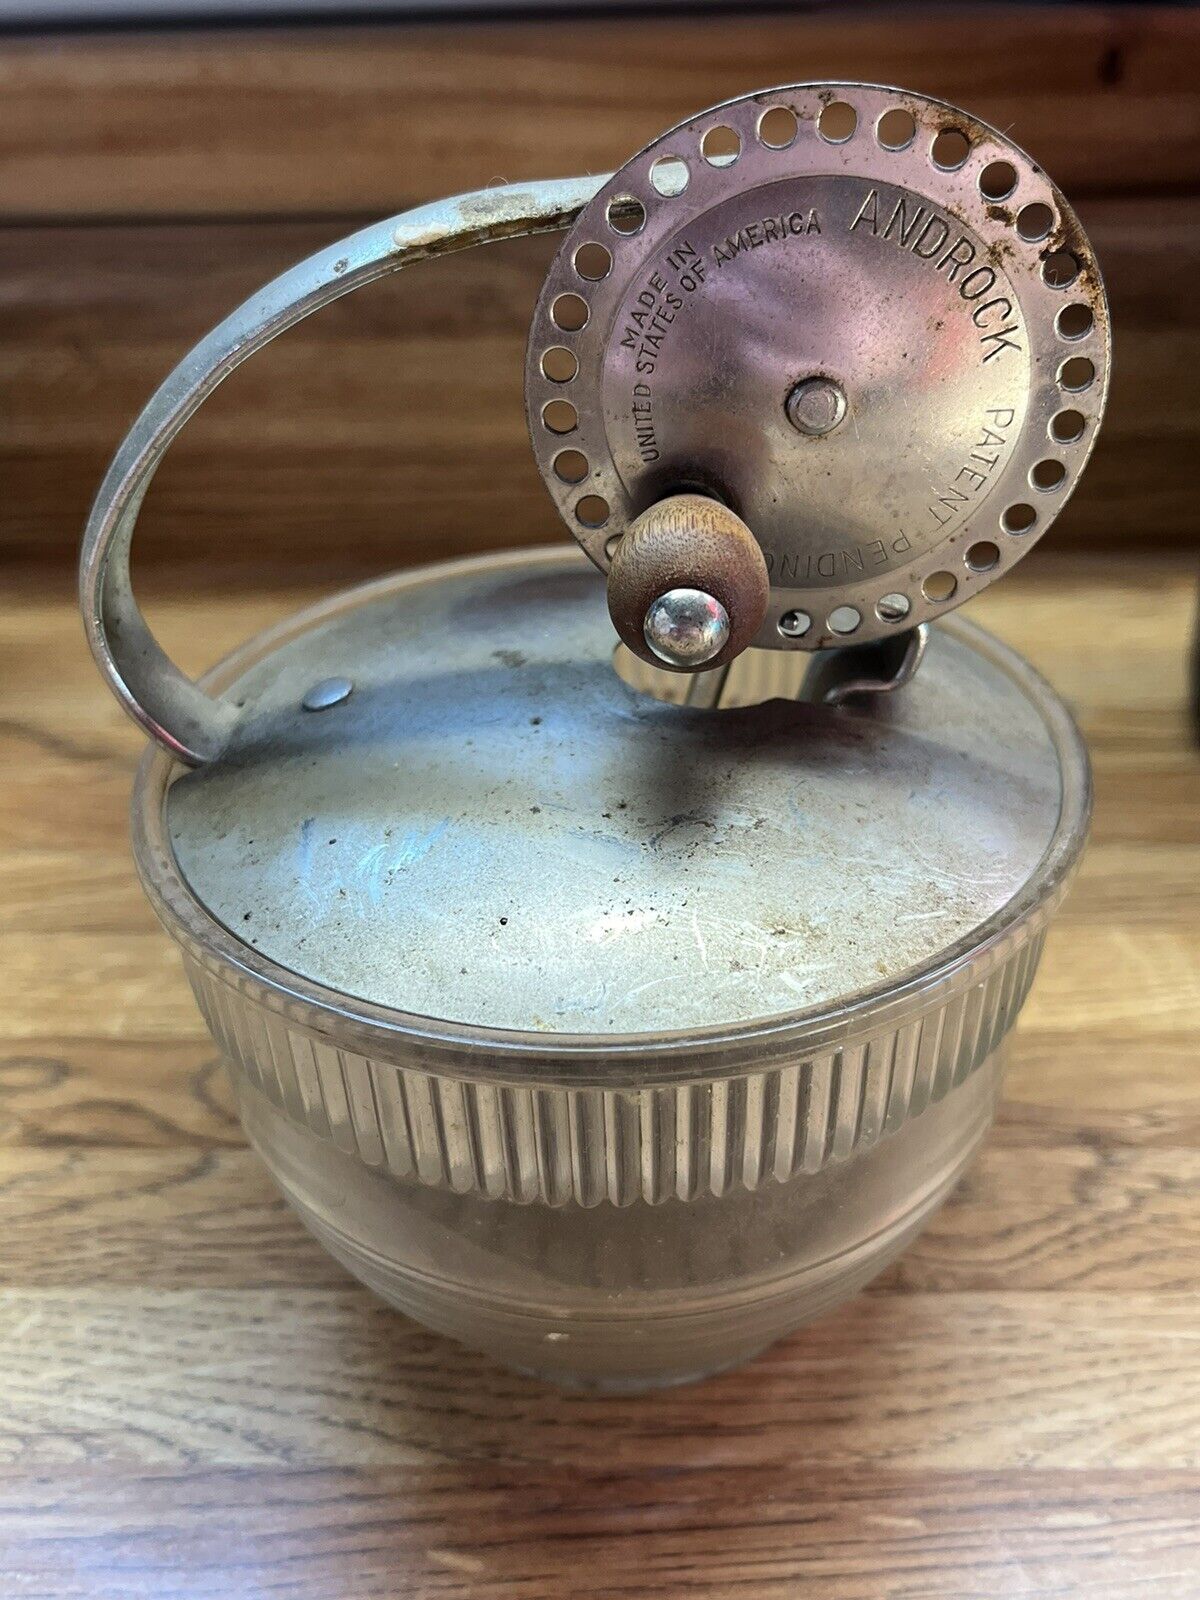 Vintage Androck Hand Mixer